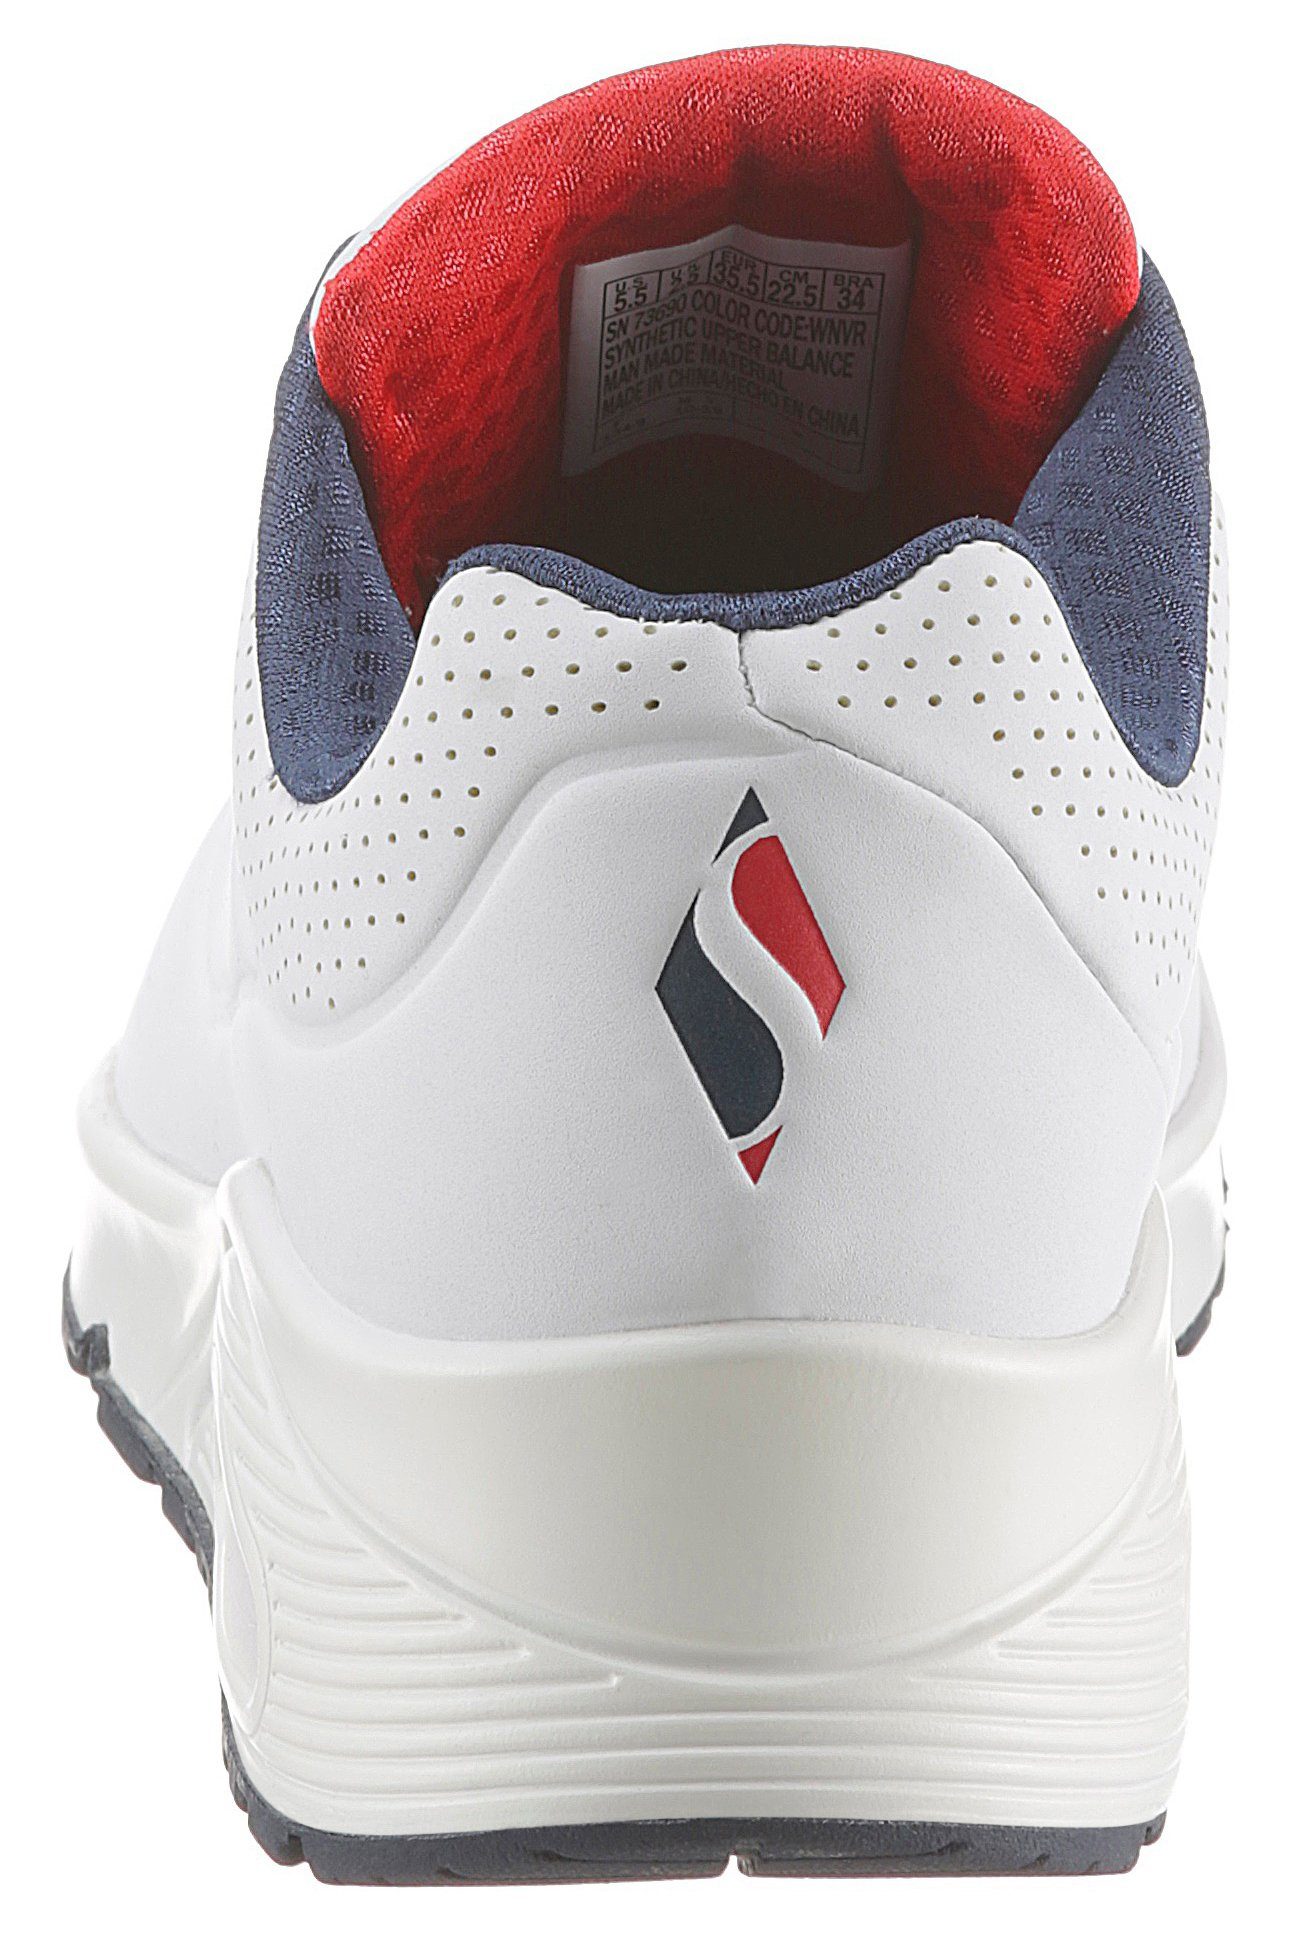 Wedgesneaker Stand Skechers Air Uno mit on Perforation feiner - white